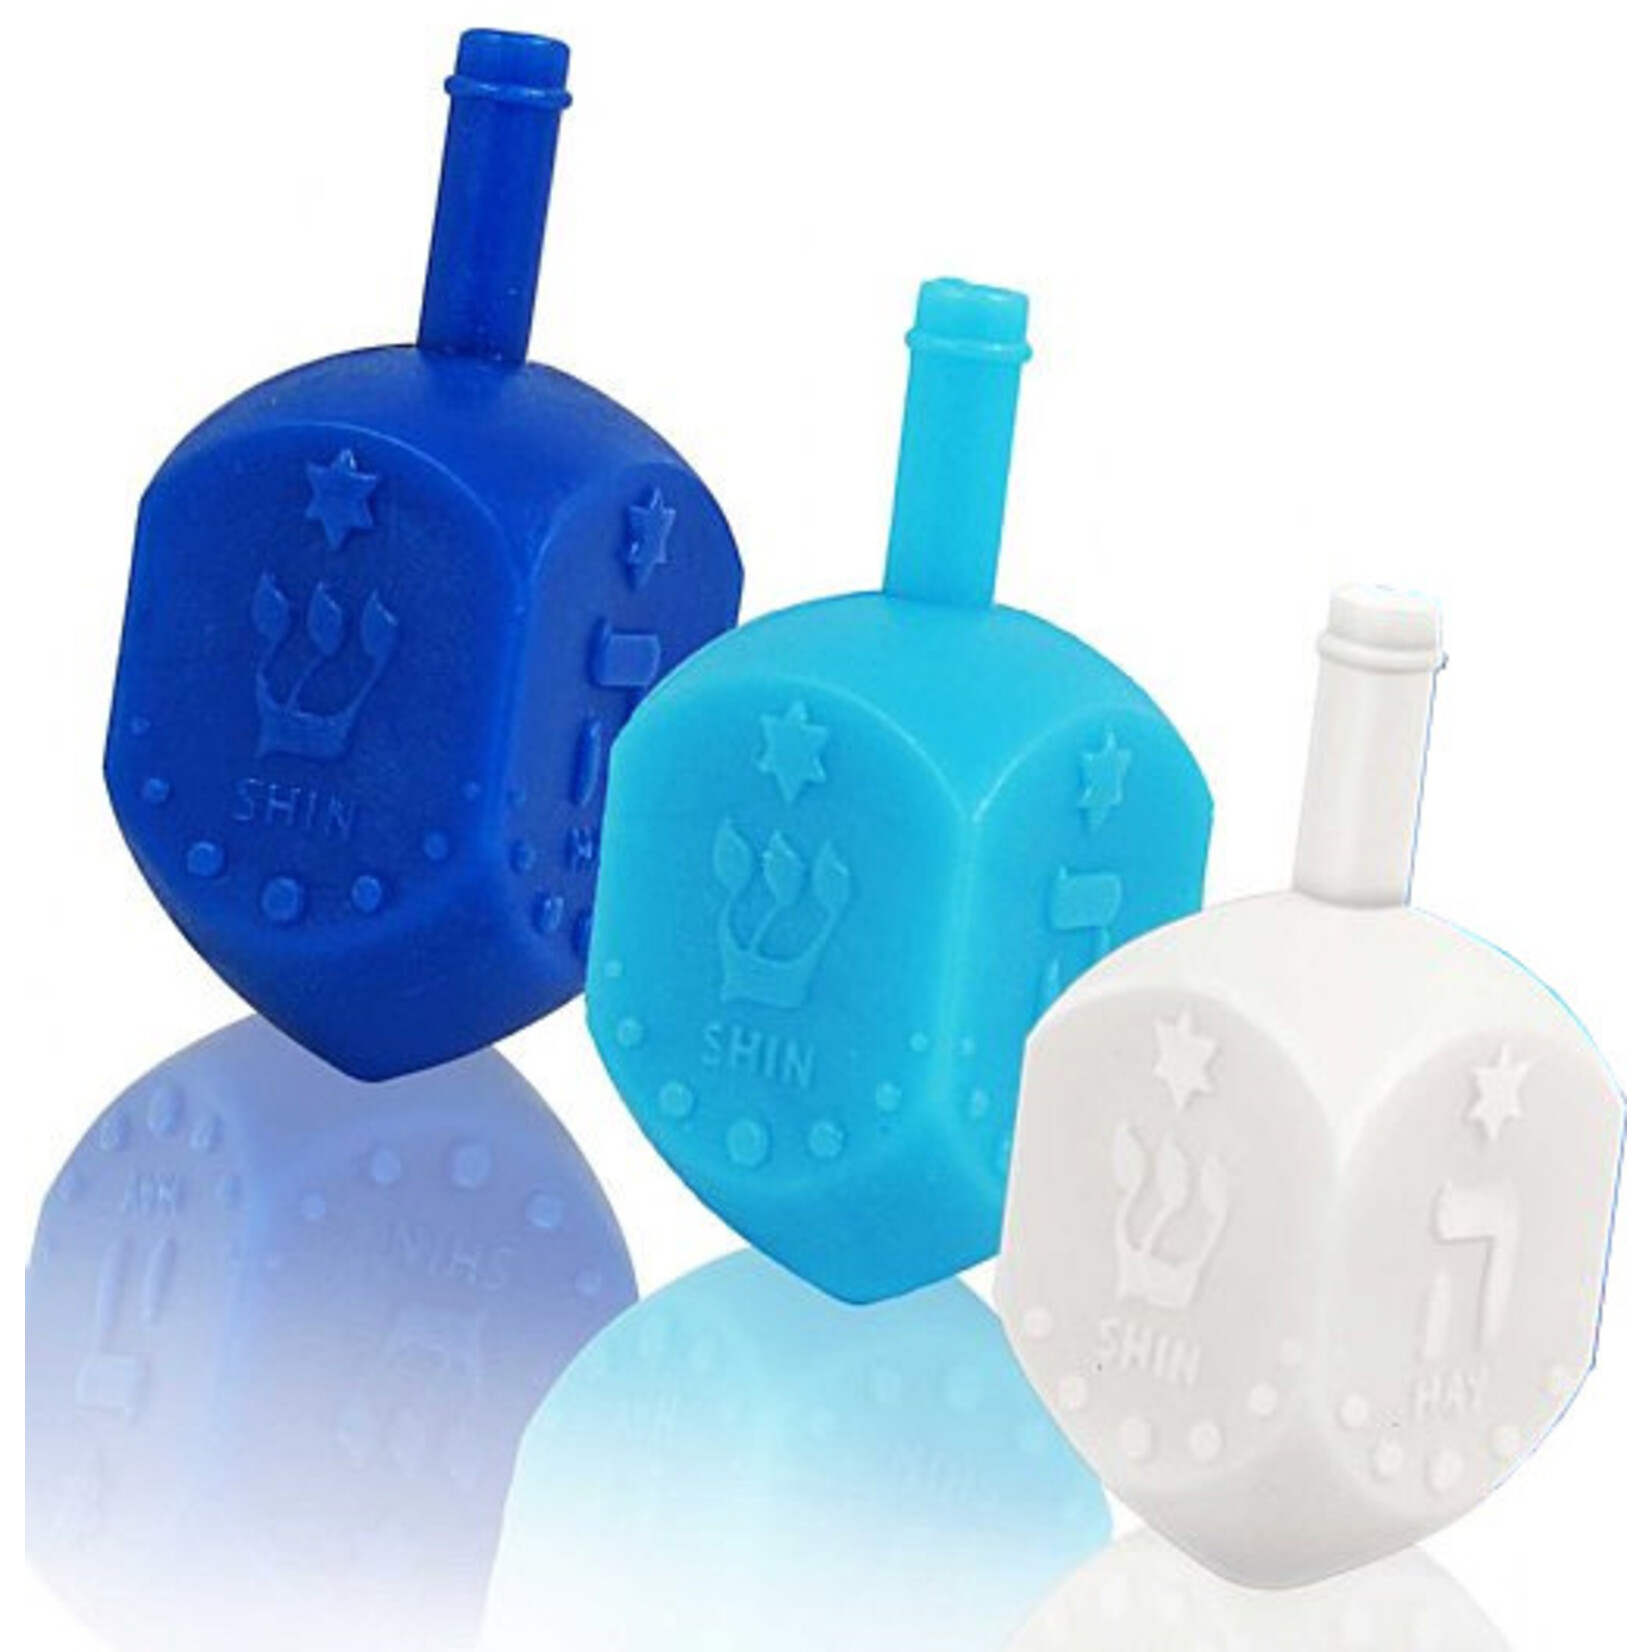 Medium Plastic Dreidels, Shades of Blue and White